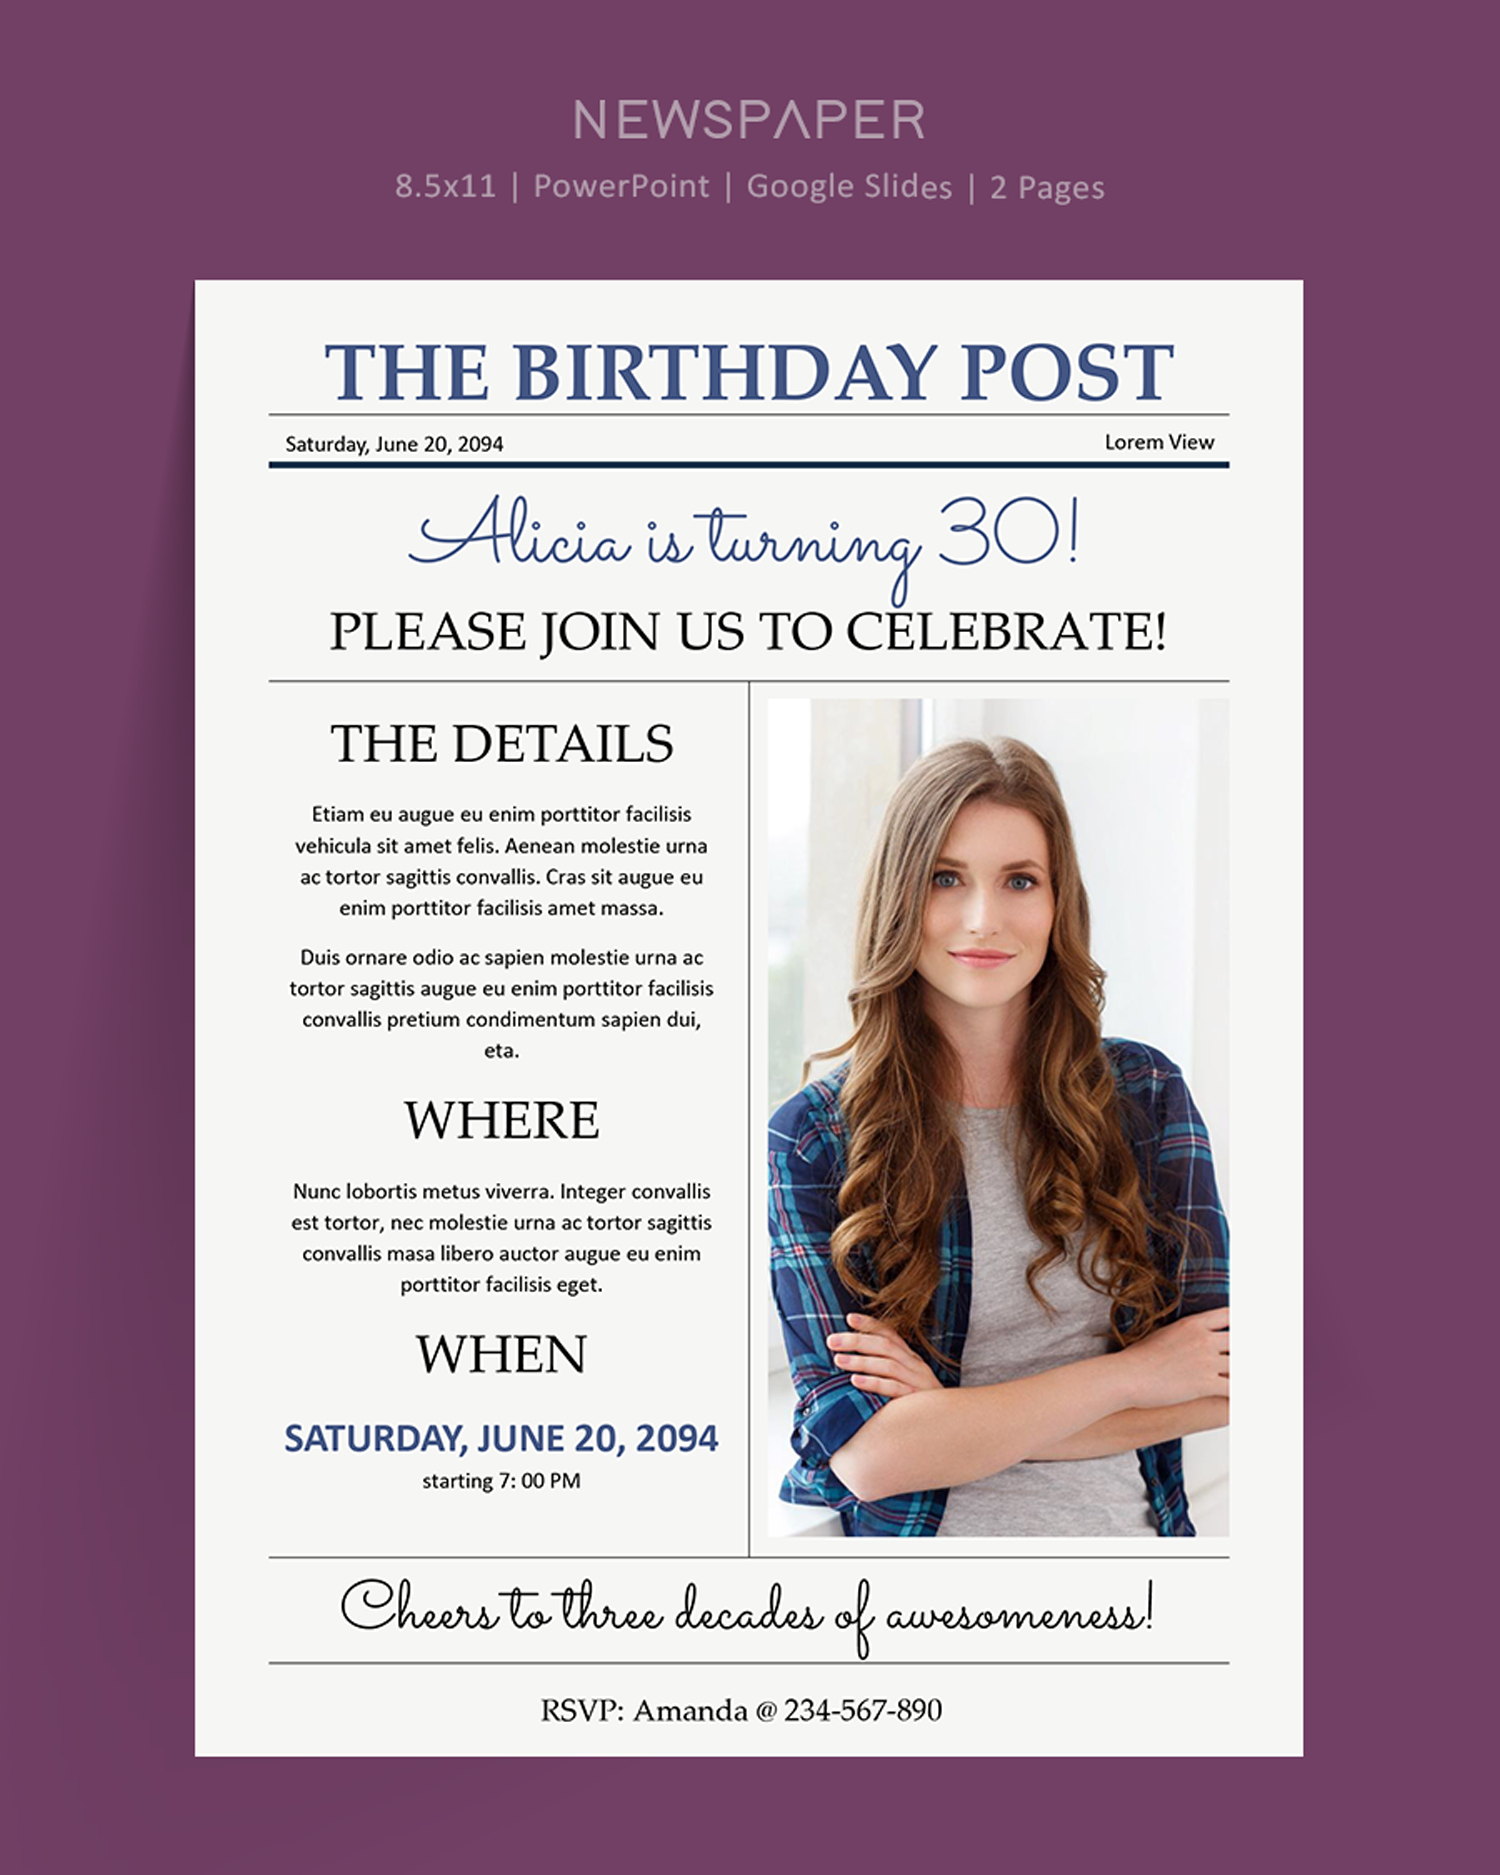 Elegant Birthday Invitation Newspaper Template - PowerPoint, Google Slides